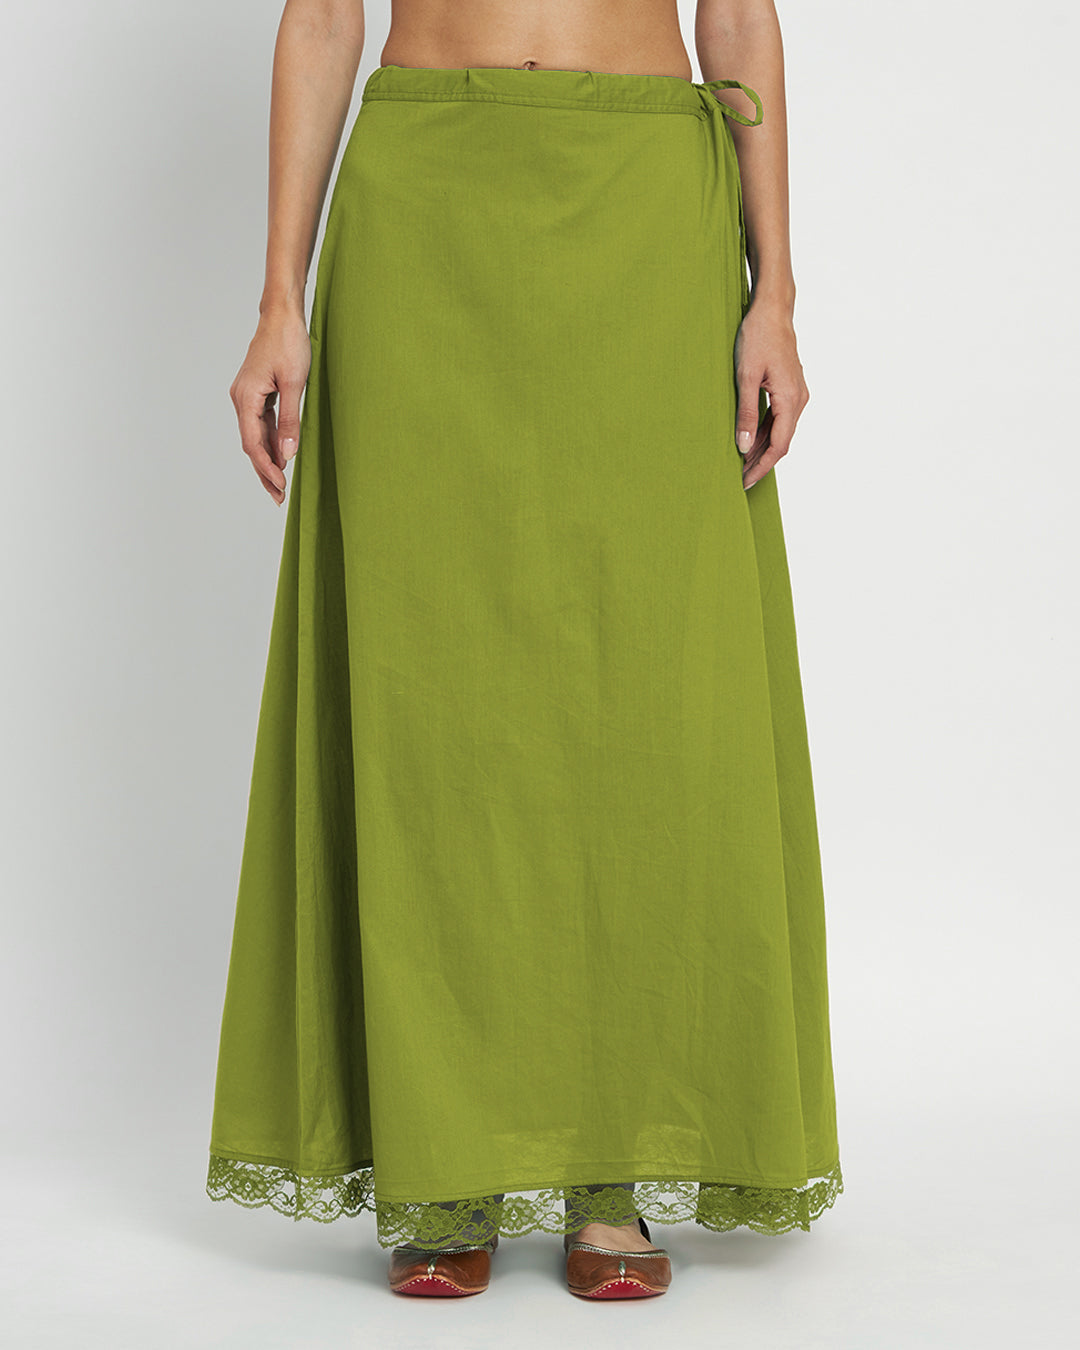 Sage Green Lace Medley Peekaboo Petticoat